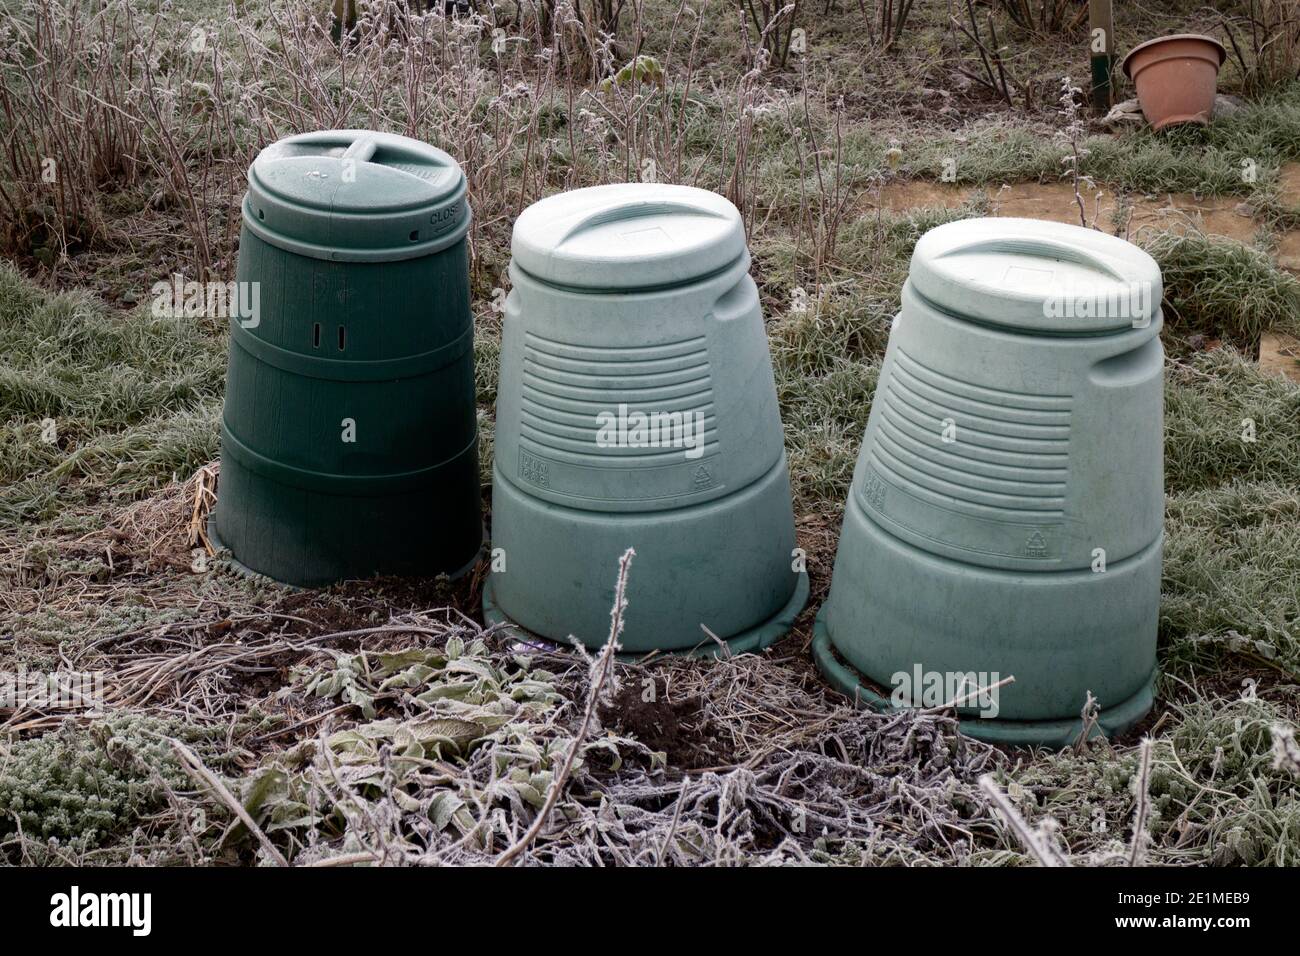 https://c8.alamy.com/comp/2E1MEB9/allotment-plastic-compost-bins-on-a-frosty-winter%60s-day-warwick-uk-2E1MEB9.jpg